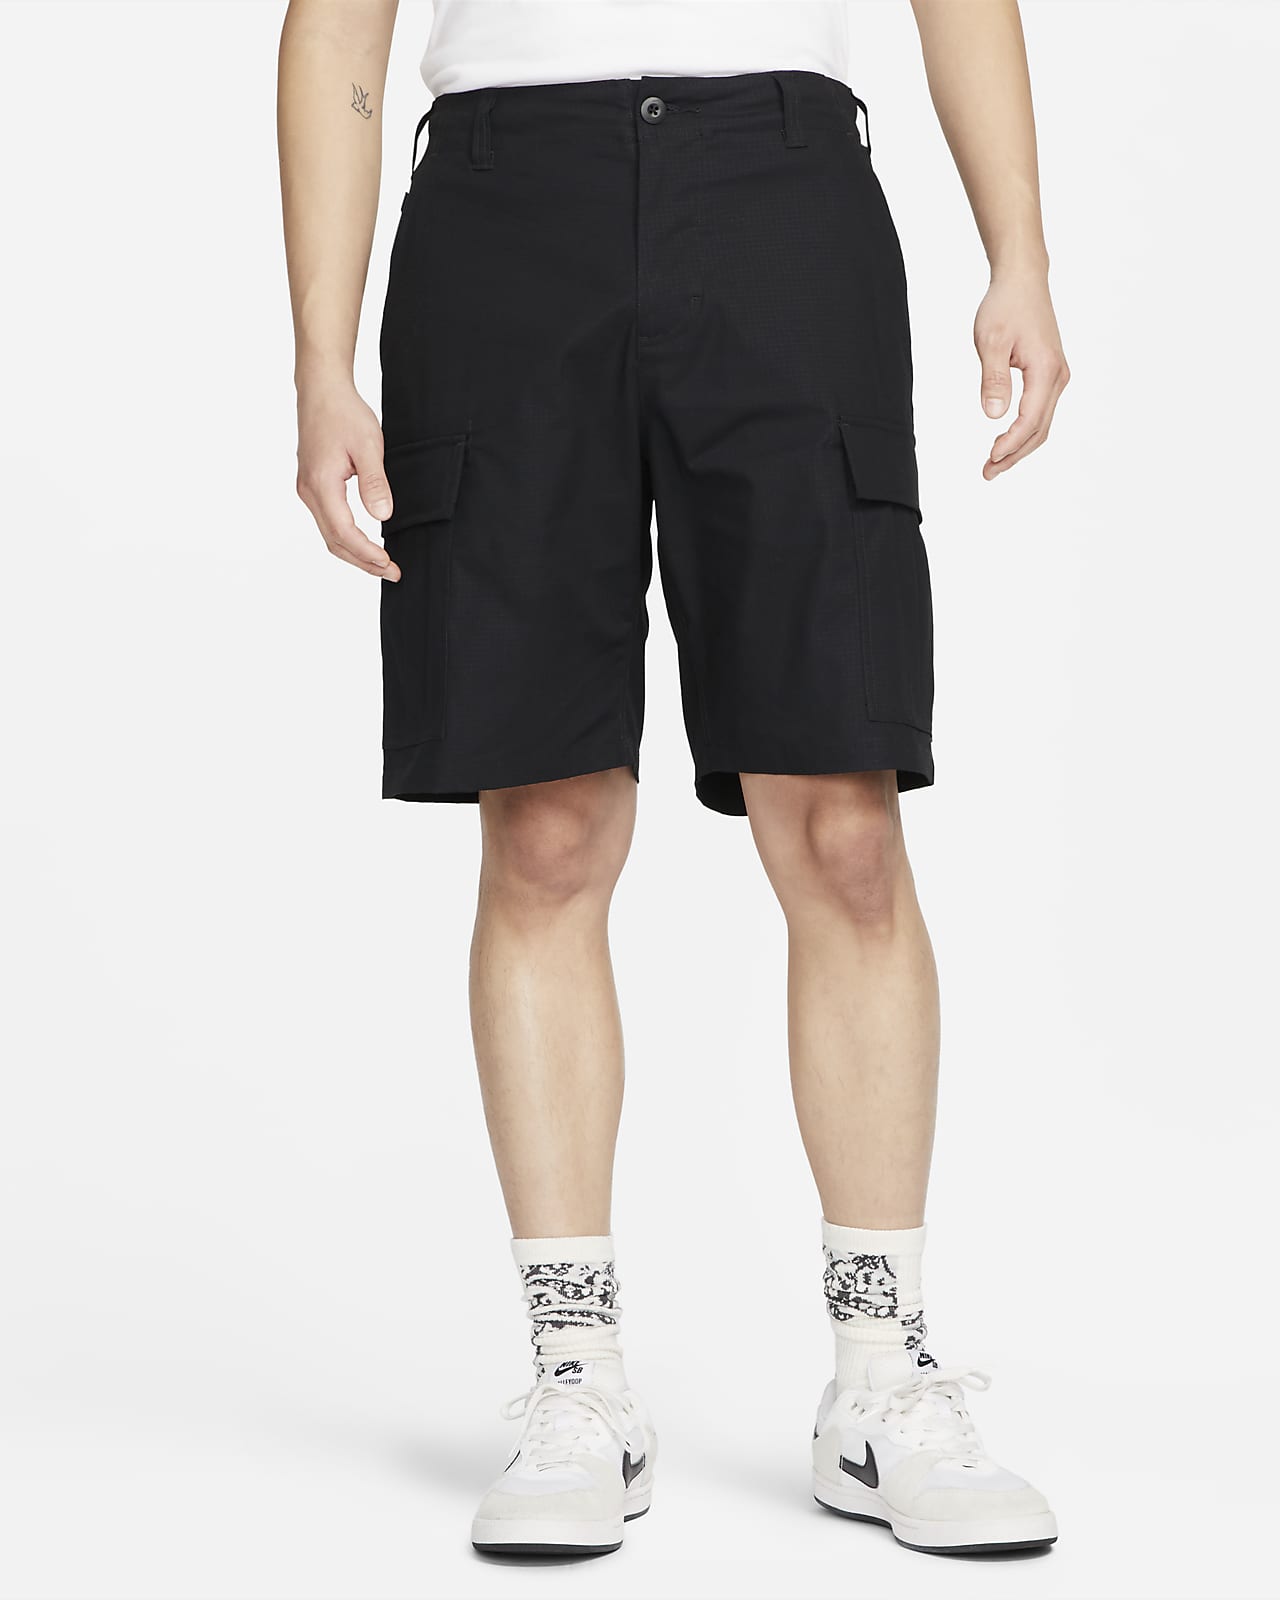 Nike SB Kearny Men's Cargo Skate Shorts